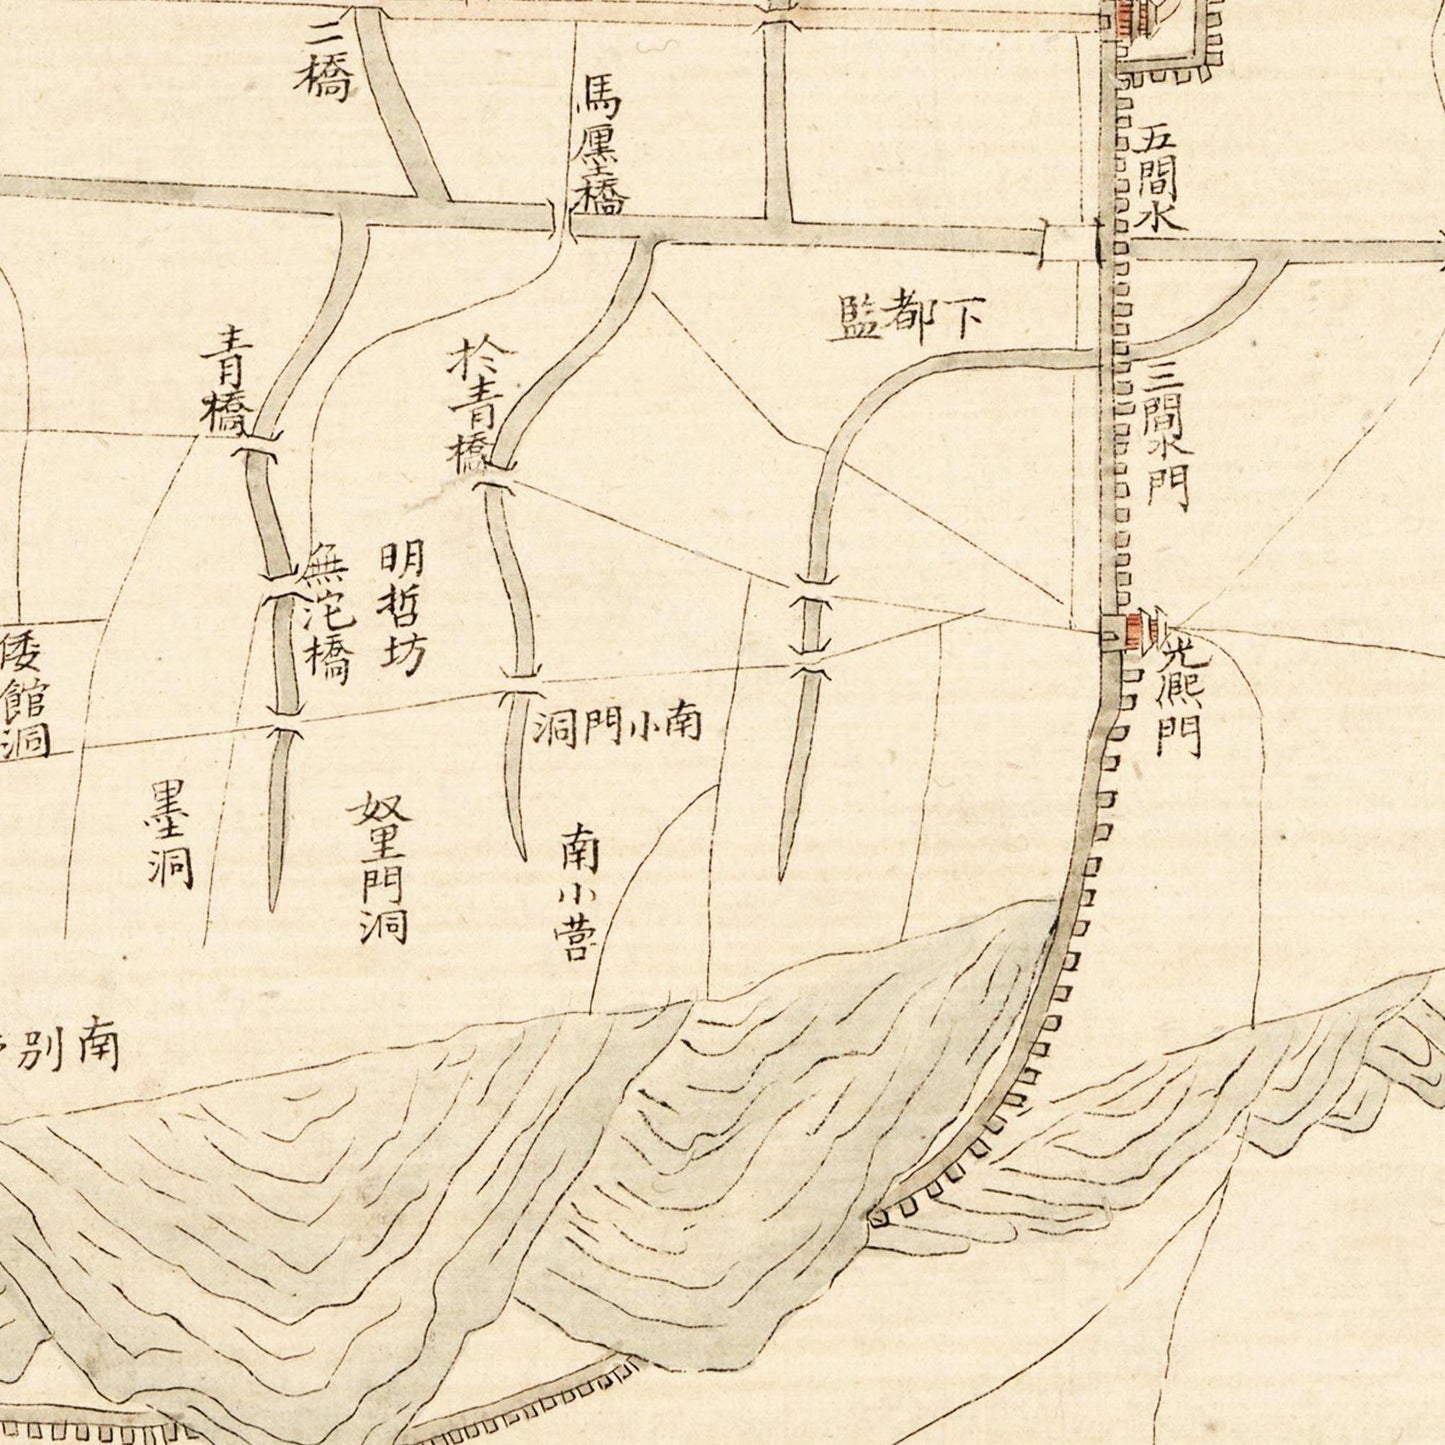 Historischer Stadtplan Seoul um 1800